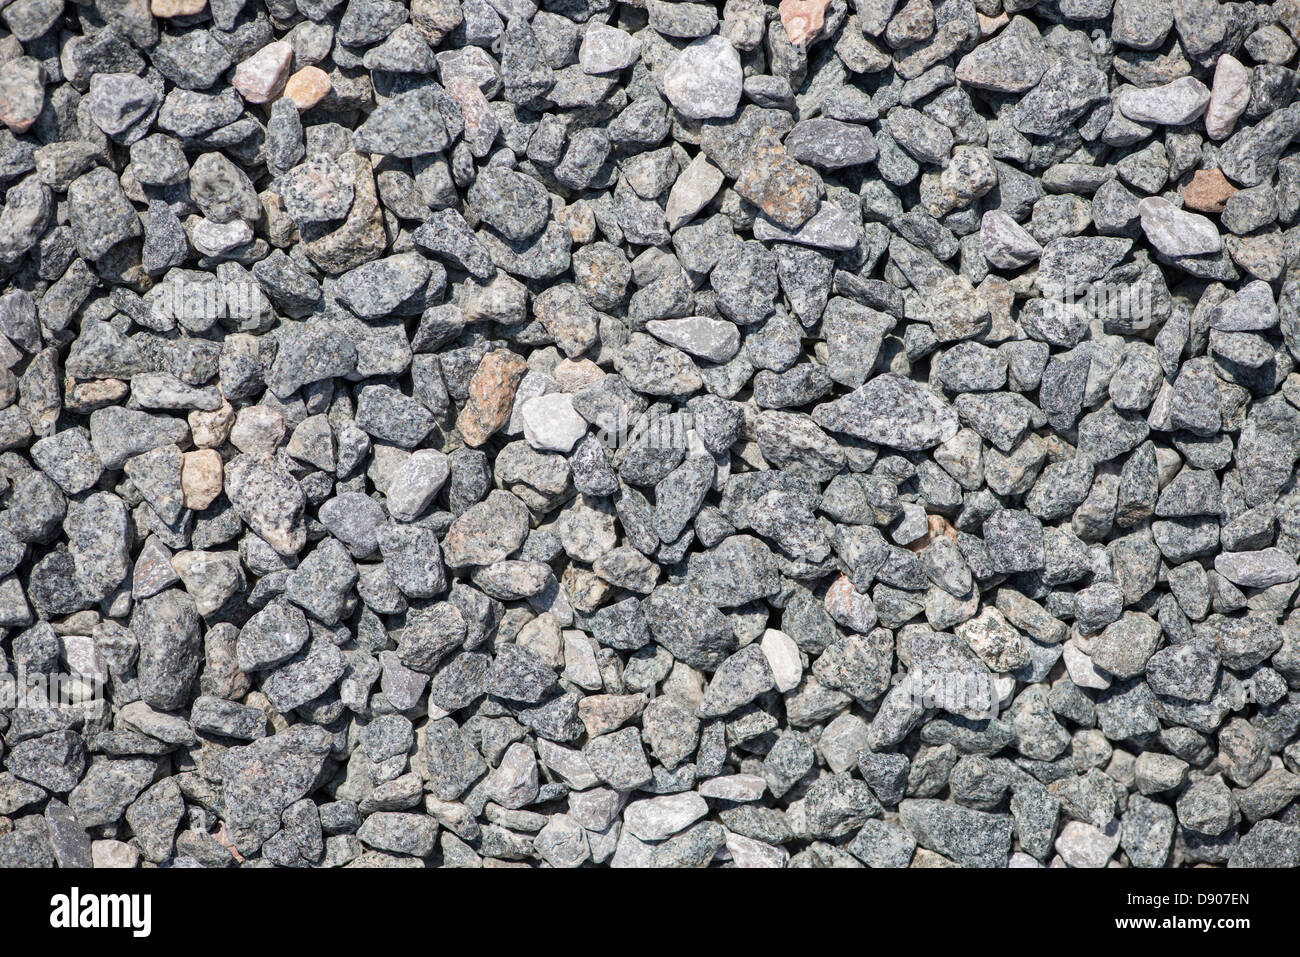 Granite gravel. Stock Photo